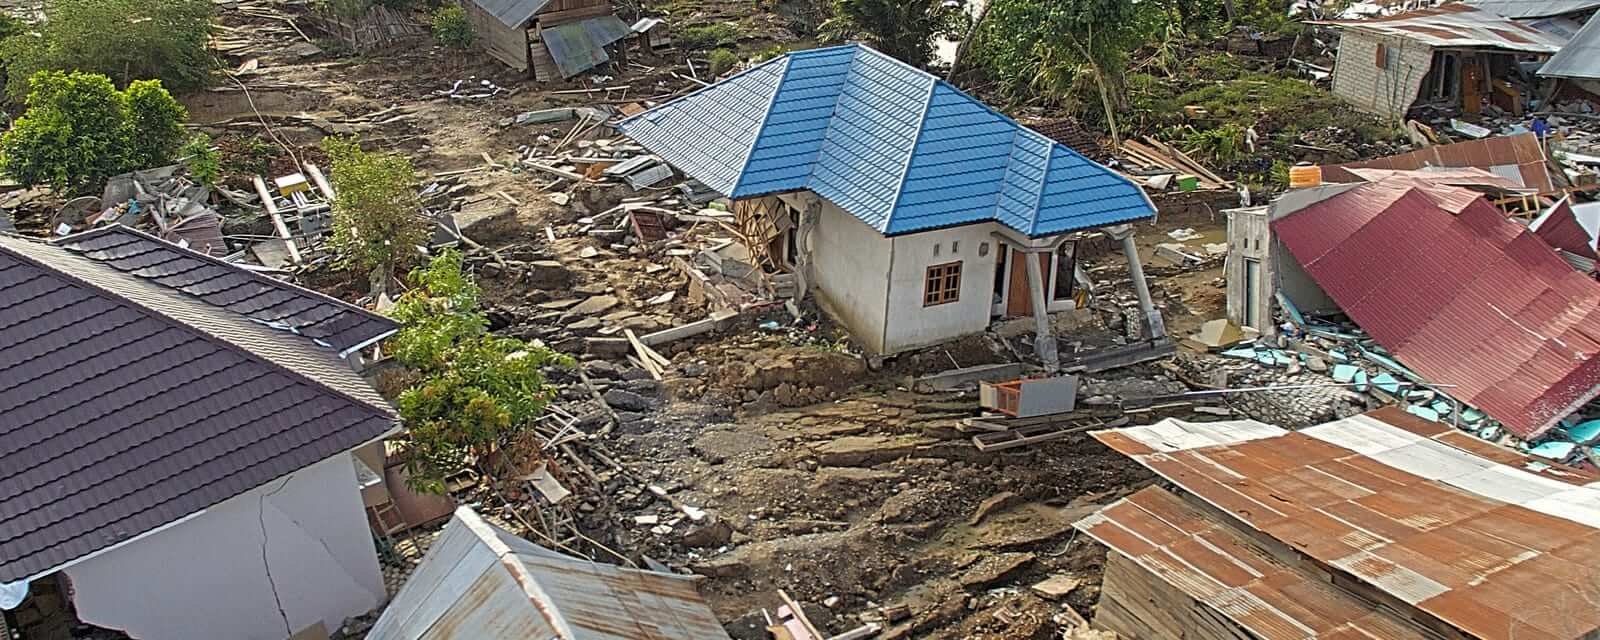 Drone Photo at Palu Sulawesi Indonesia after the Tsunami and Earthquake